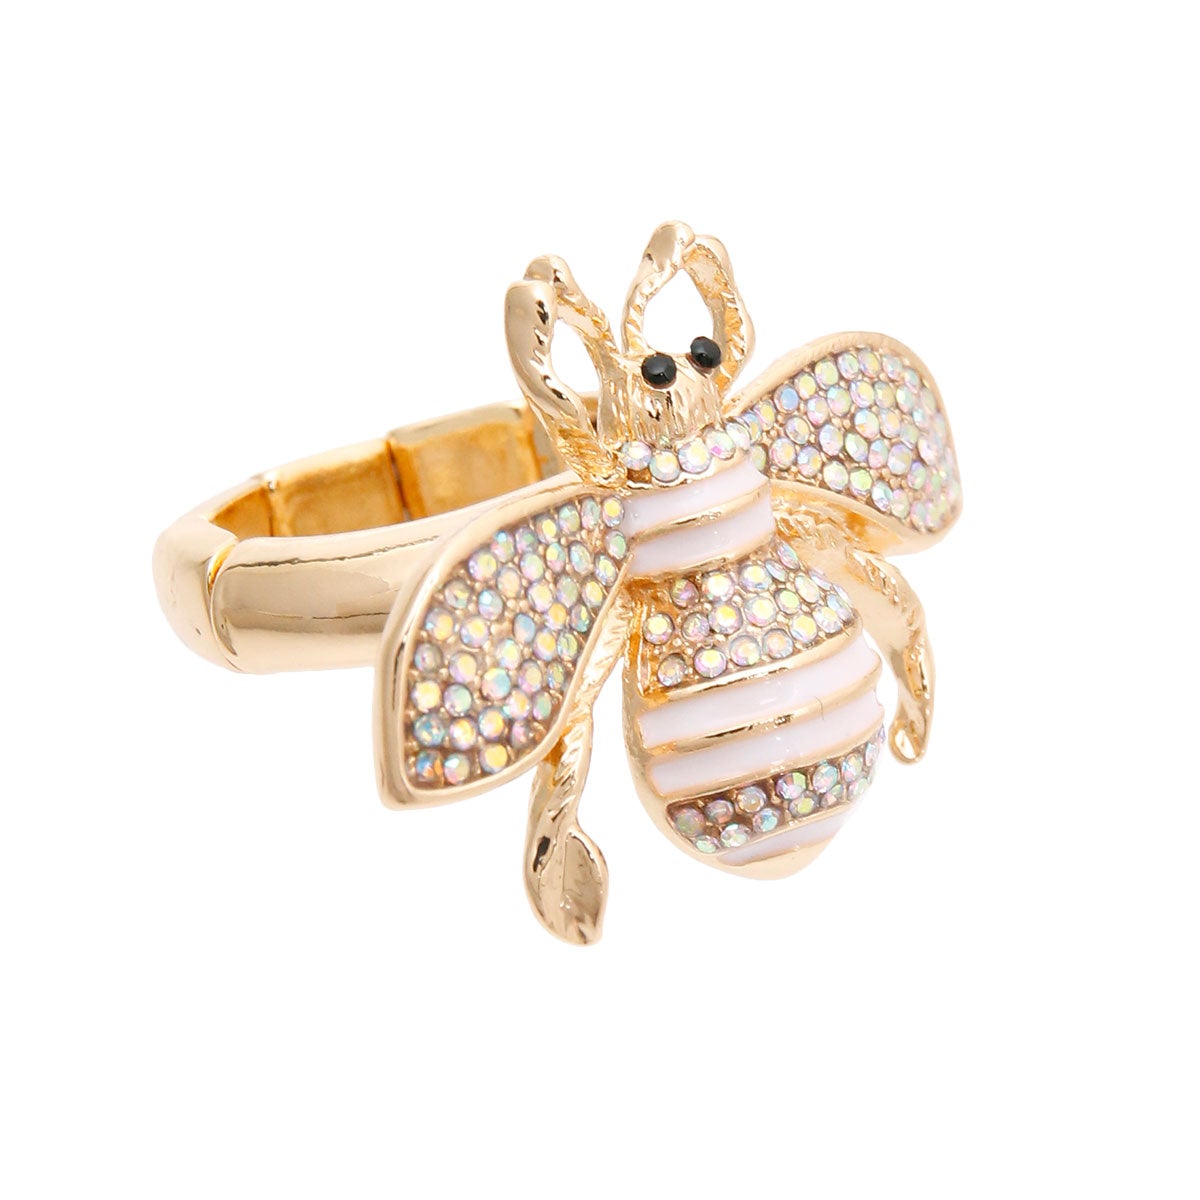 Designer Style Aurora Borealis Bee Ring